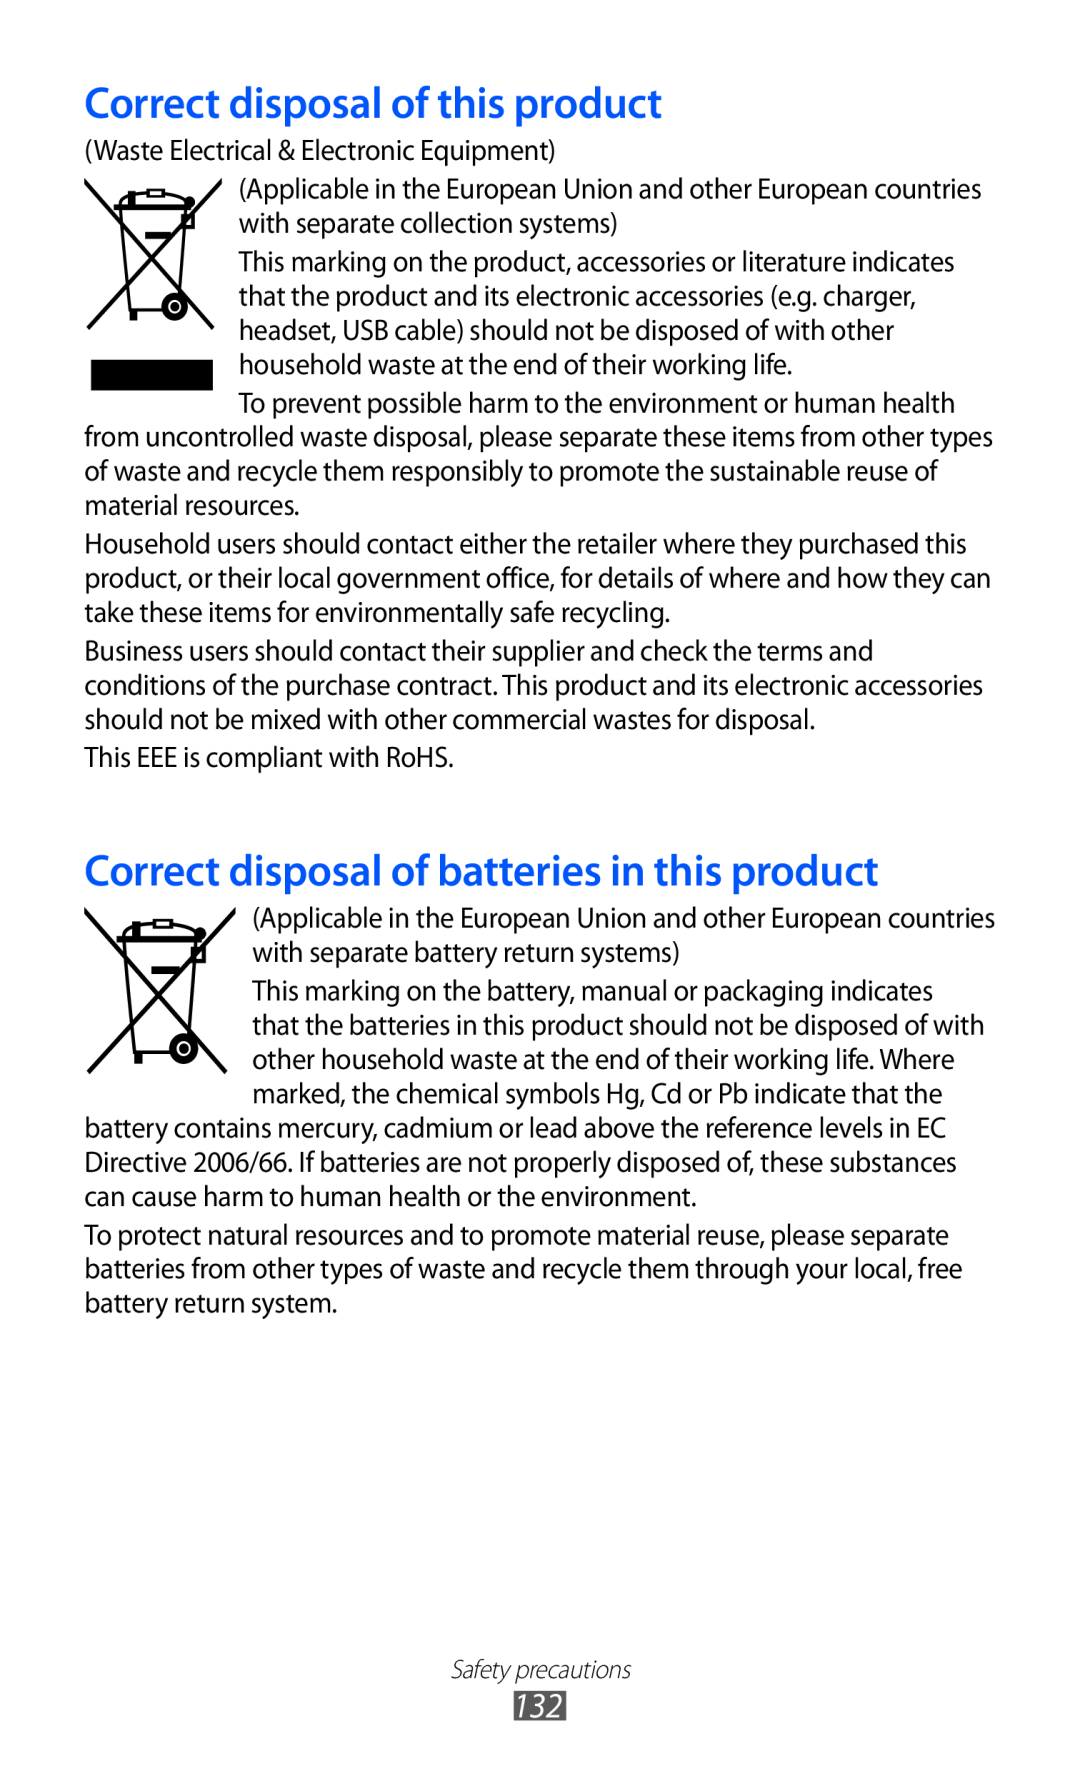 Samsung GT-S5380PWASFR, GT-S5380SSADBT Correct disposal of this product, Correct disposal of batteries in this product 